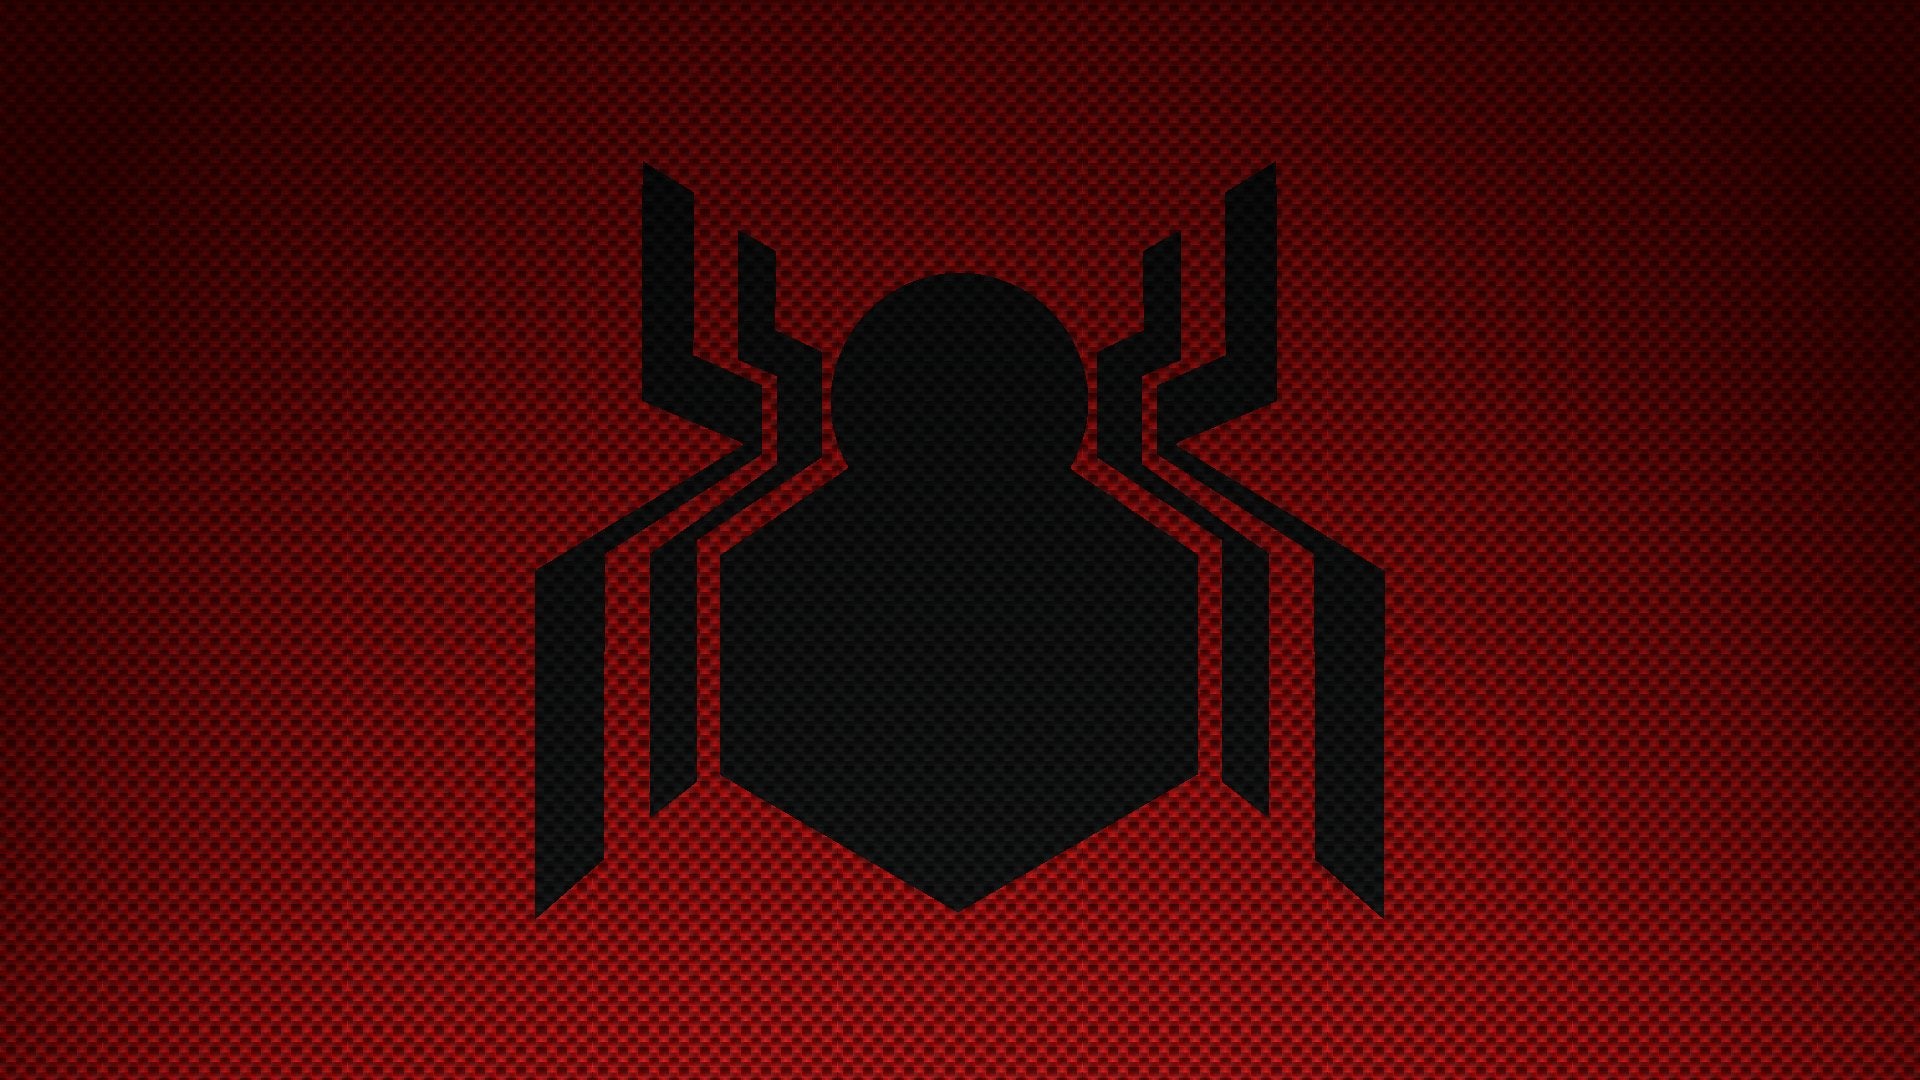 spiderman symbol wallpaper,red,black,logo,text,font